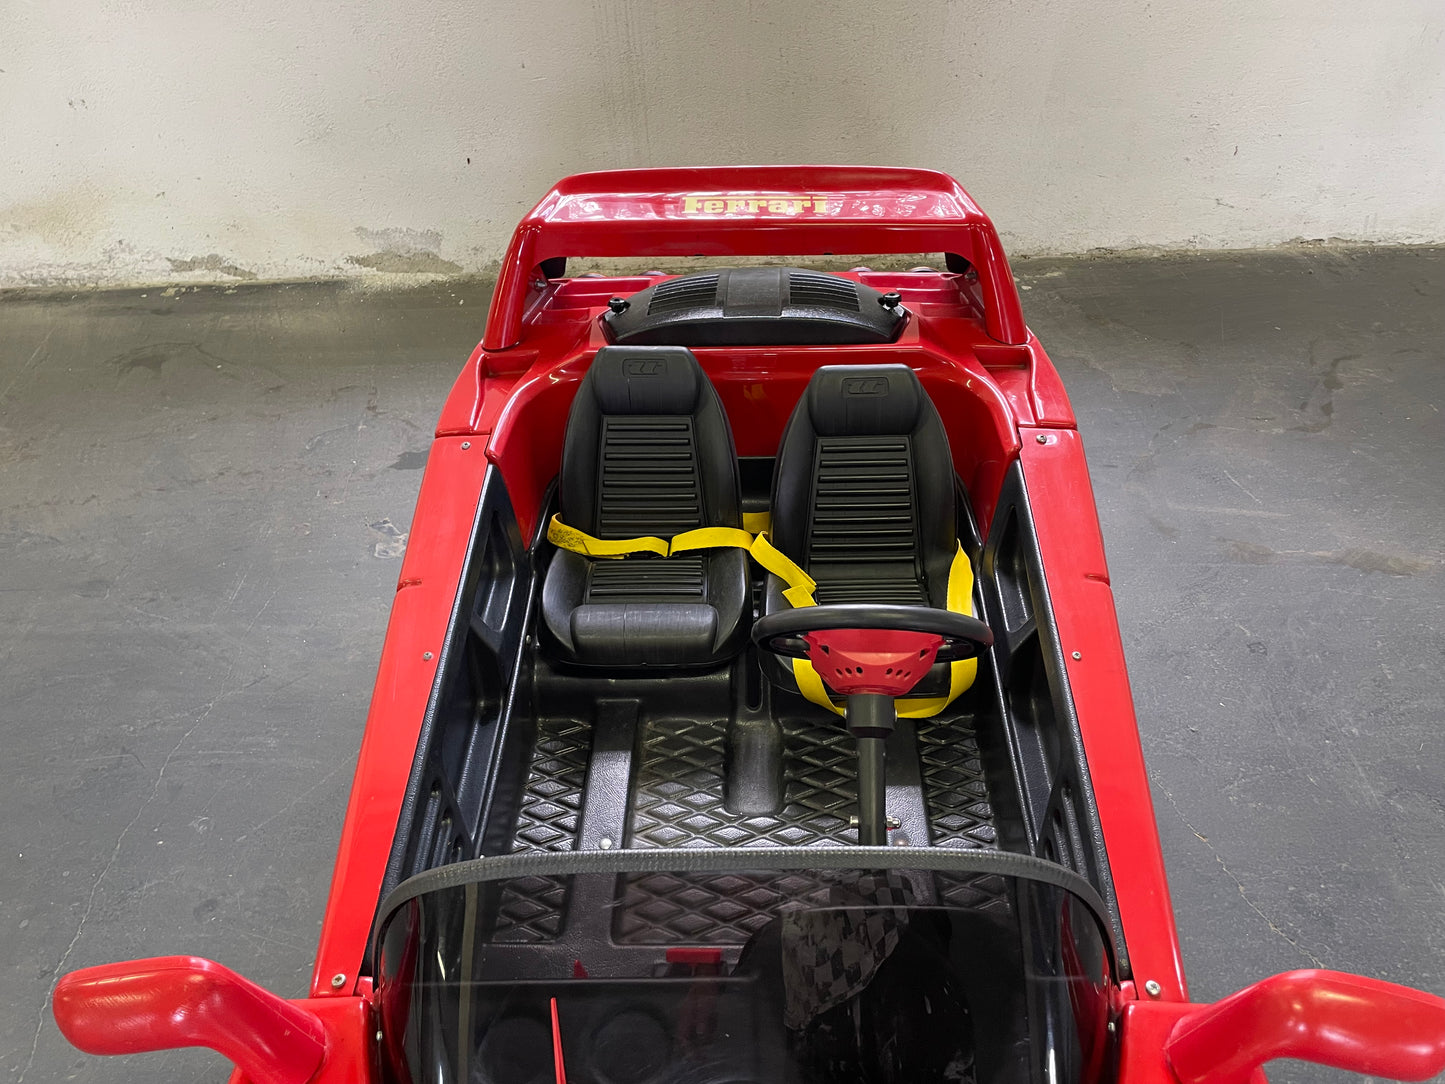 TT Toys Toys Ferrari F40-Style Electric Go-Kart